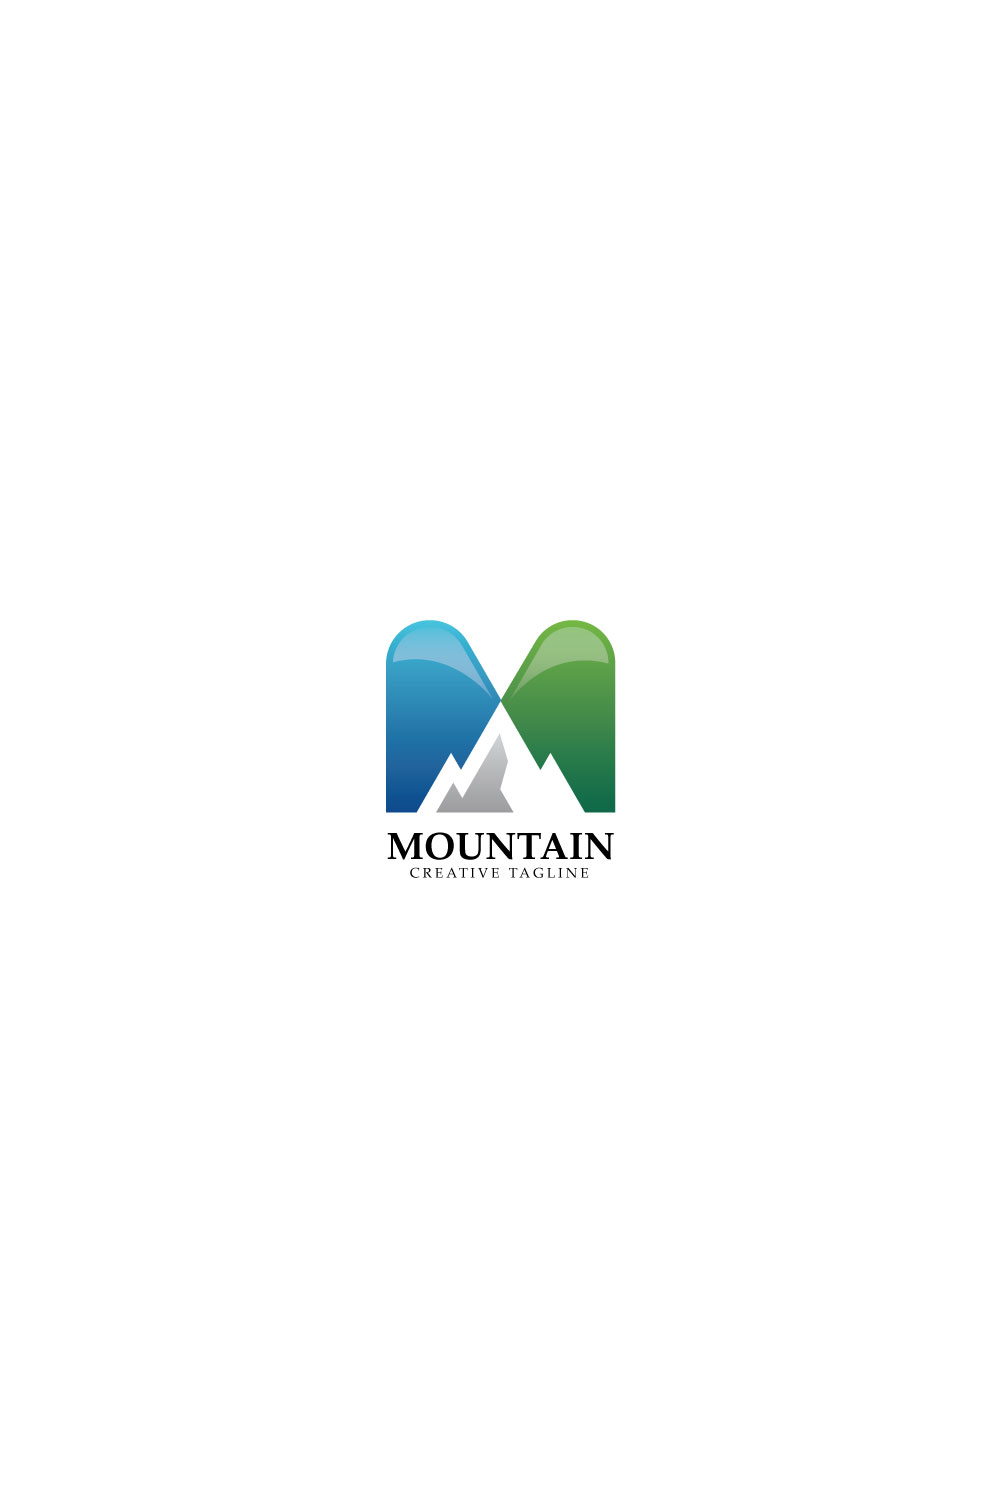 Mountain - Letter M Logo pinterest preview image.